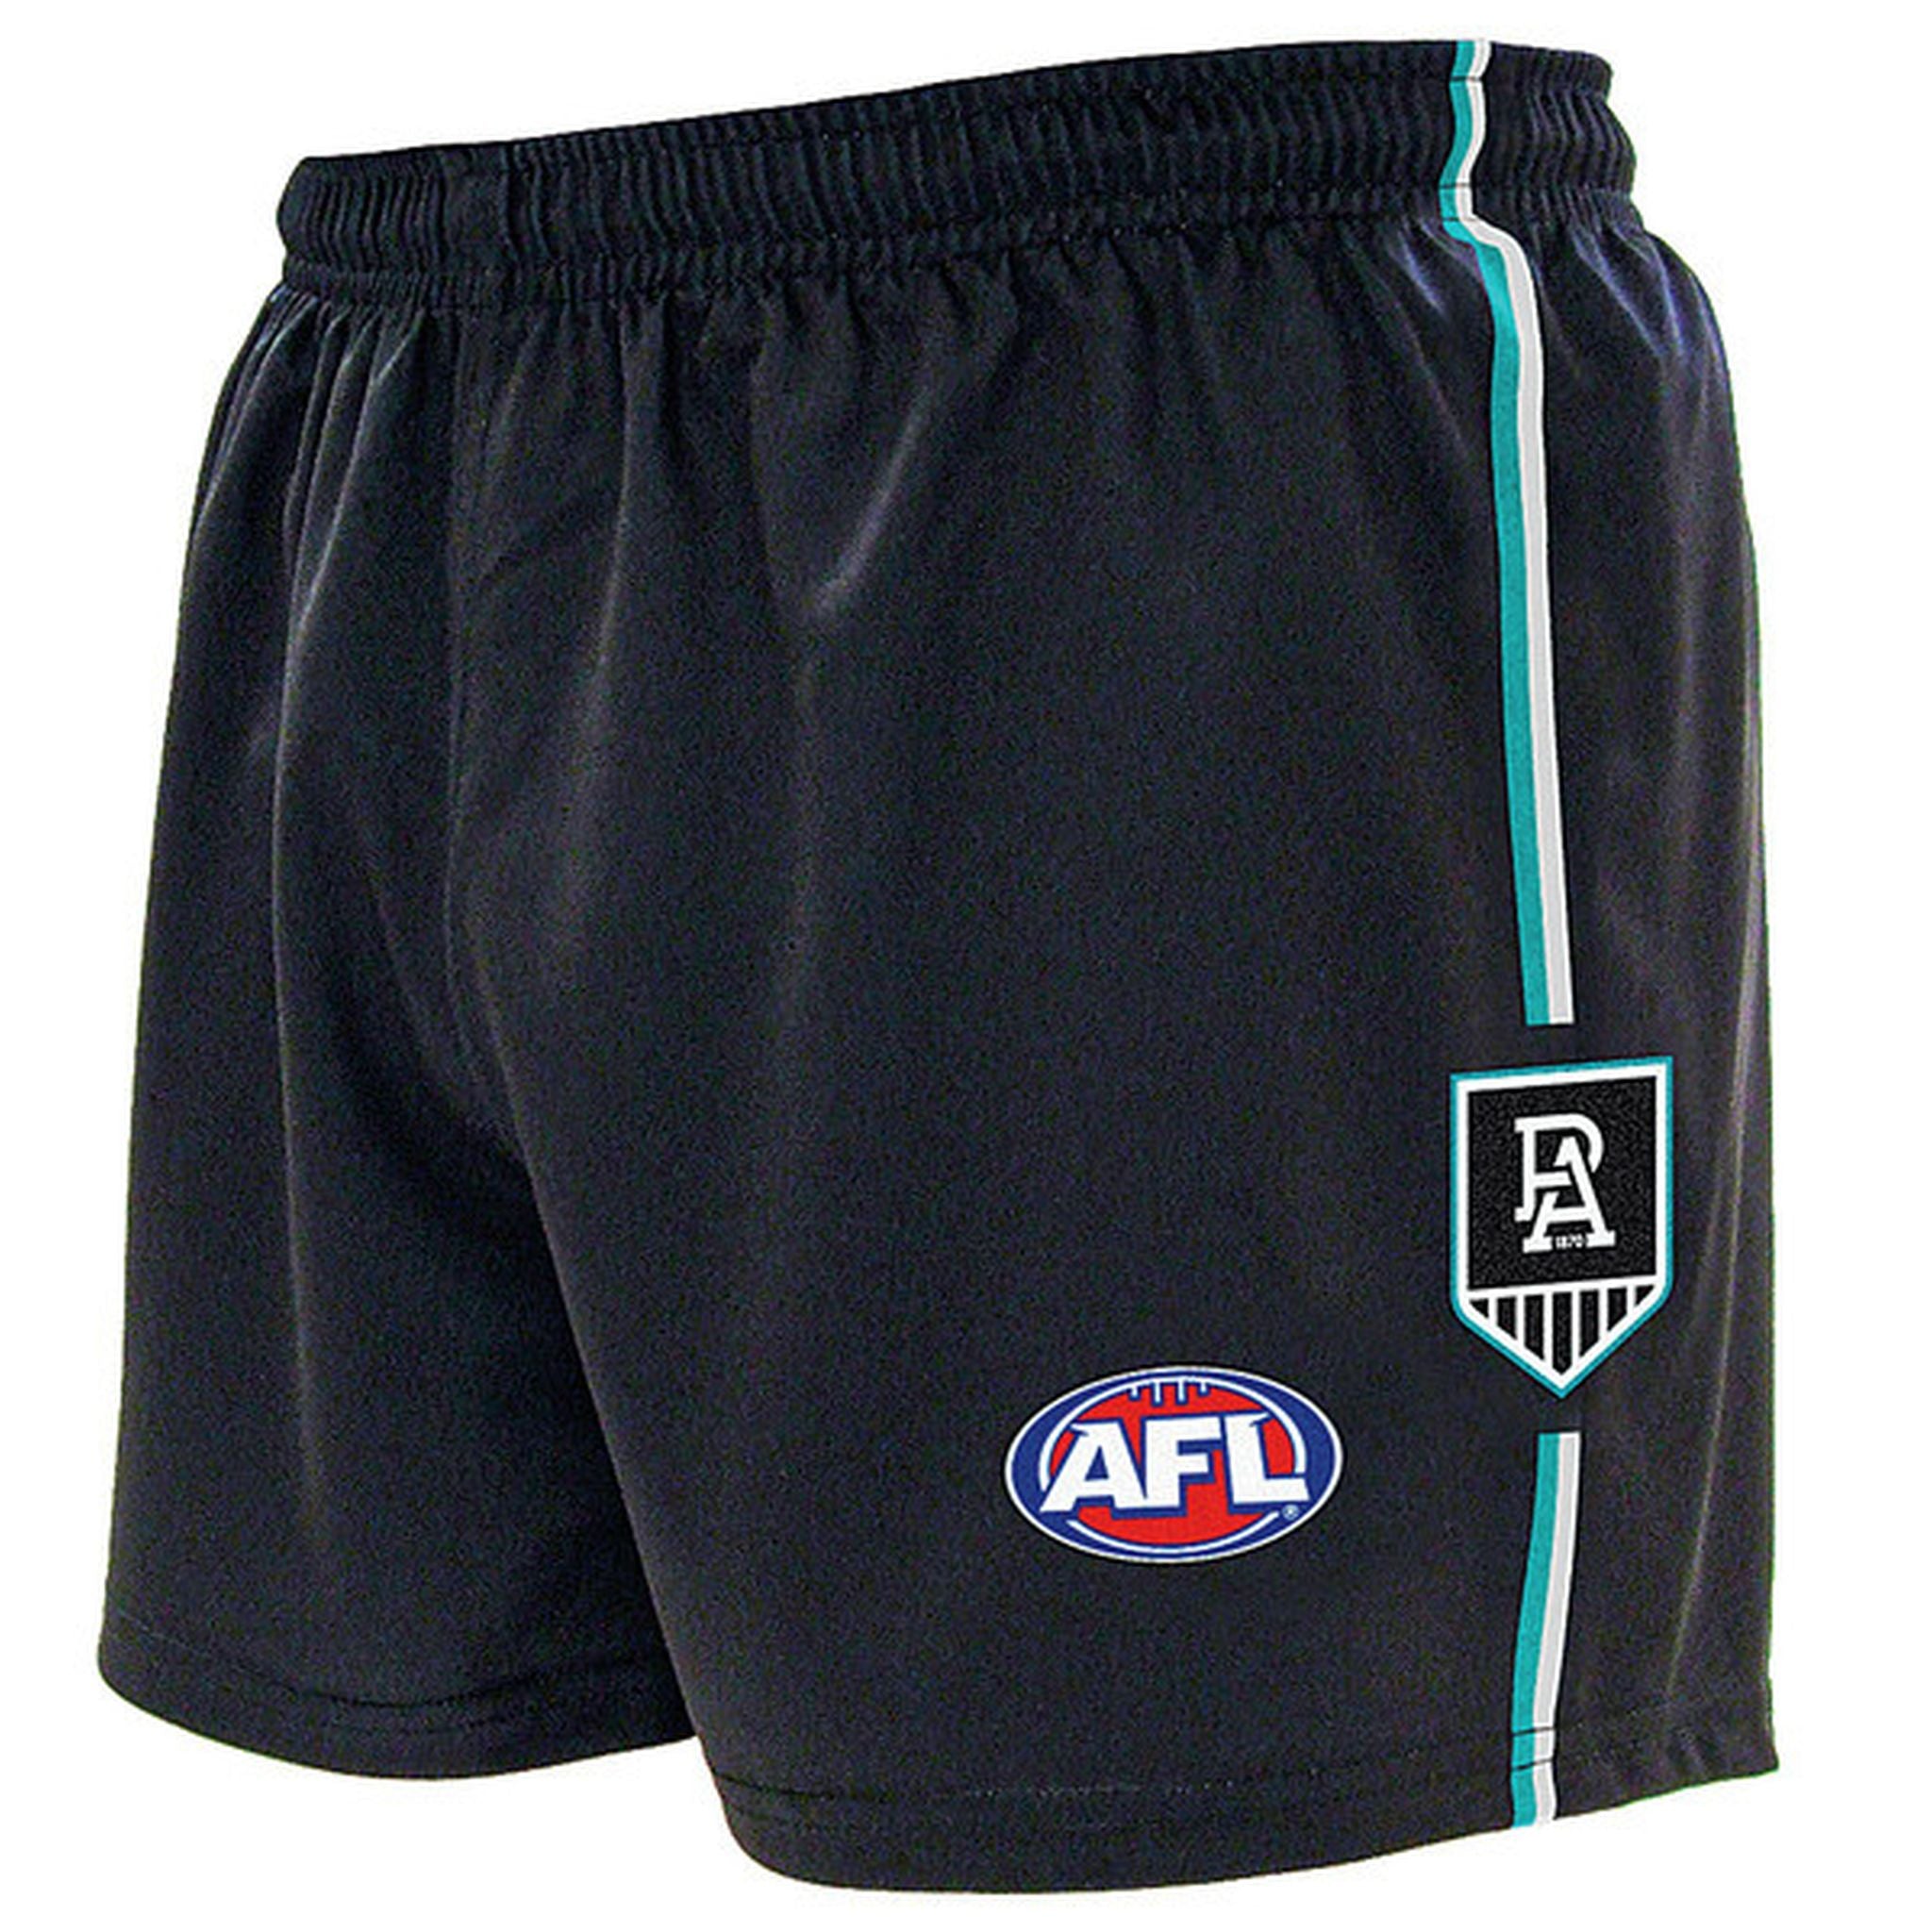 Burley Port Power AFL Replica Adults Shorts